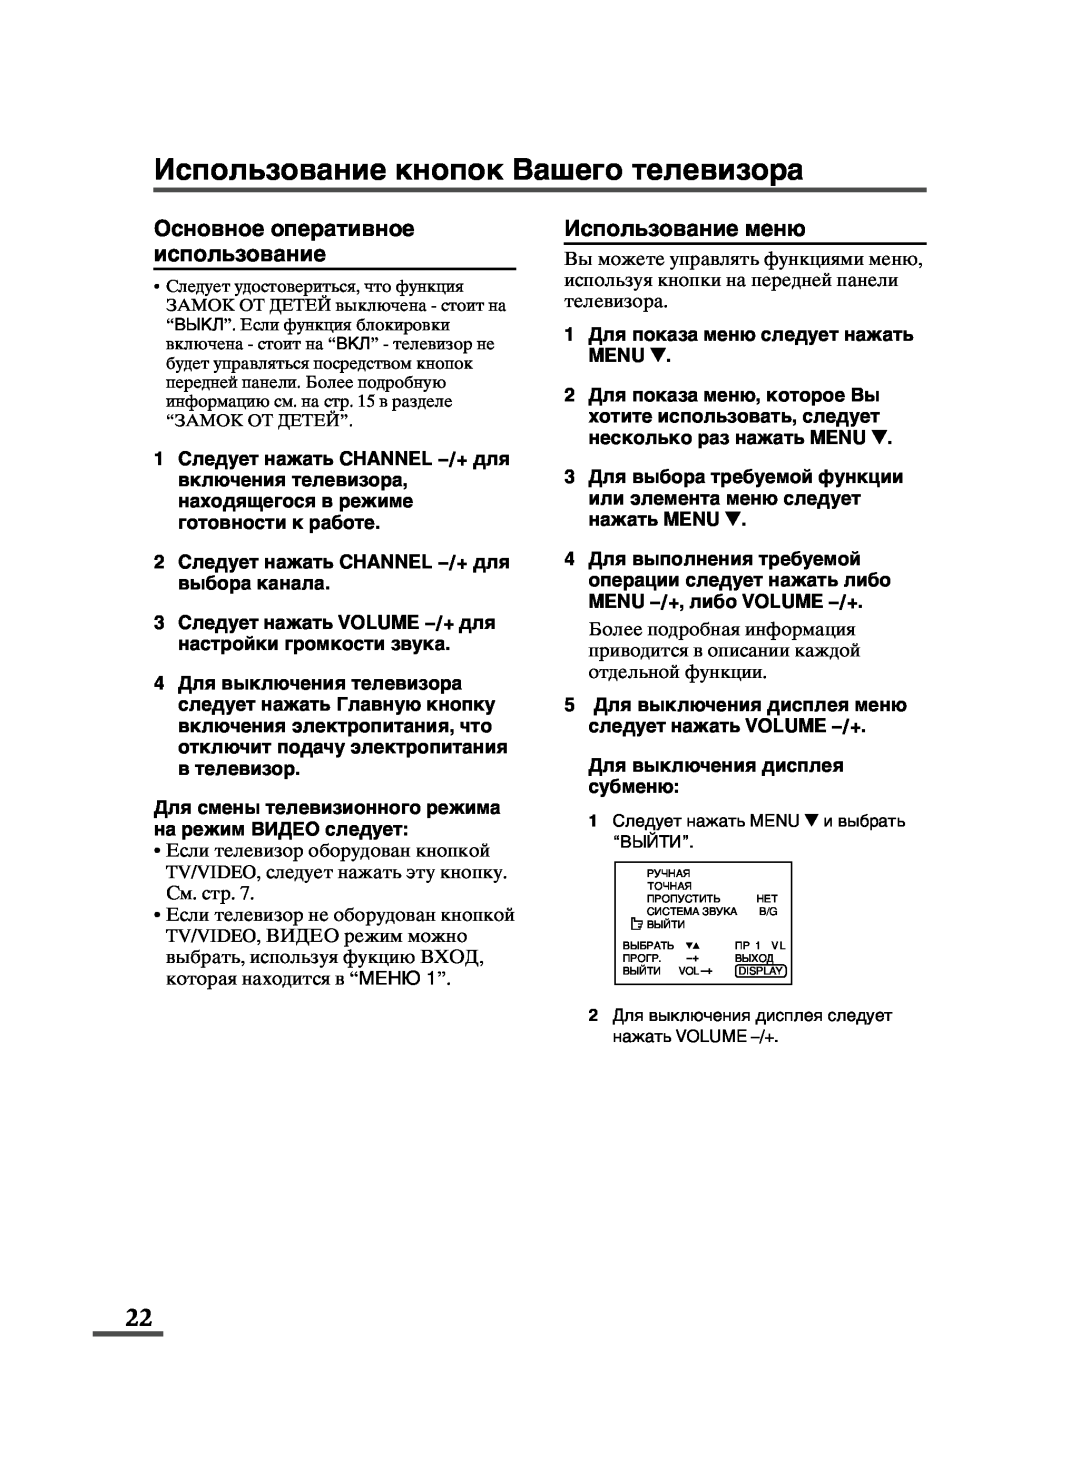 JVC specifications Channel M, MENU y, Menu M, Volume M, VOLUME m, 1 V L, Vol -+, Display 